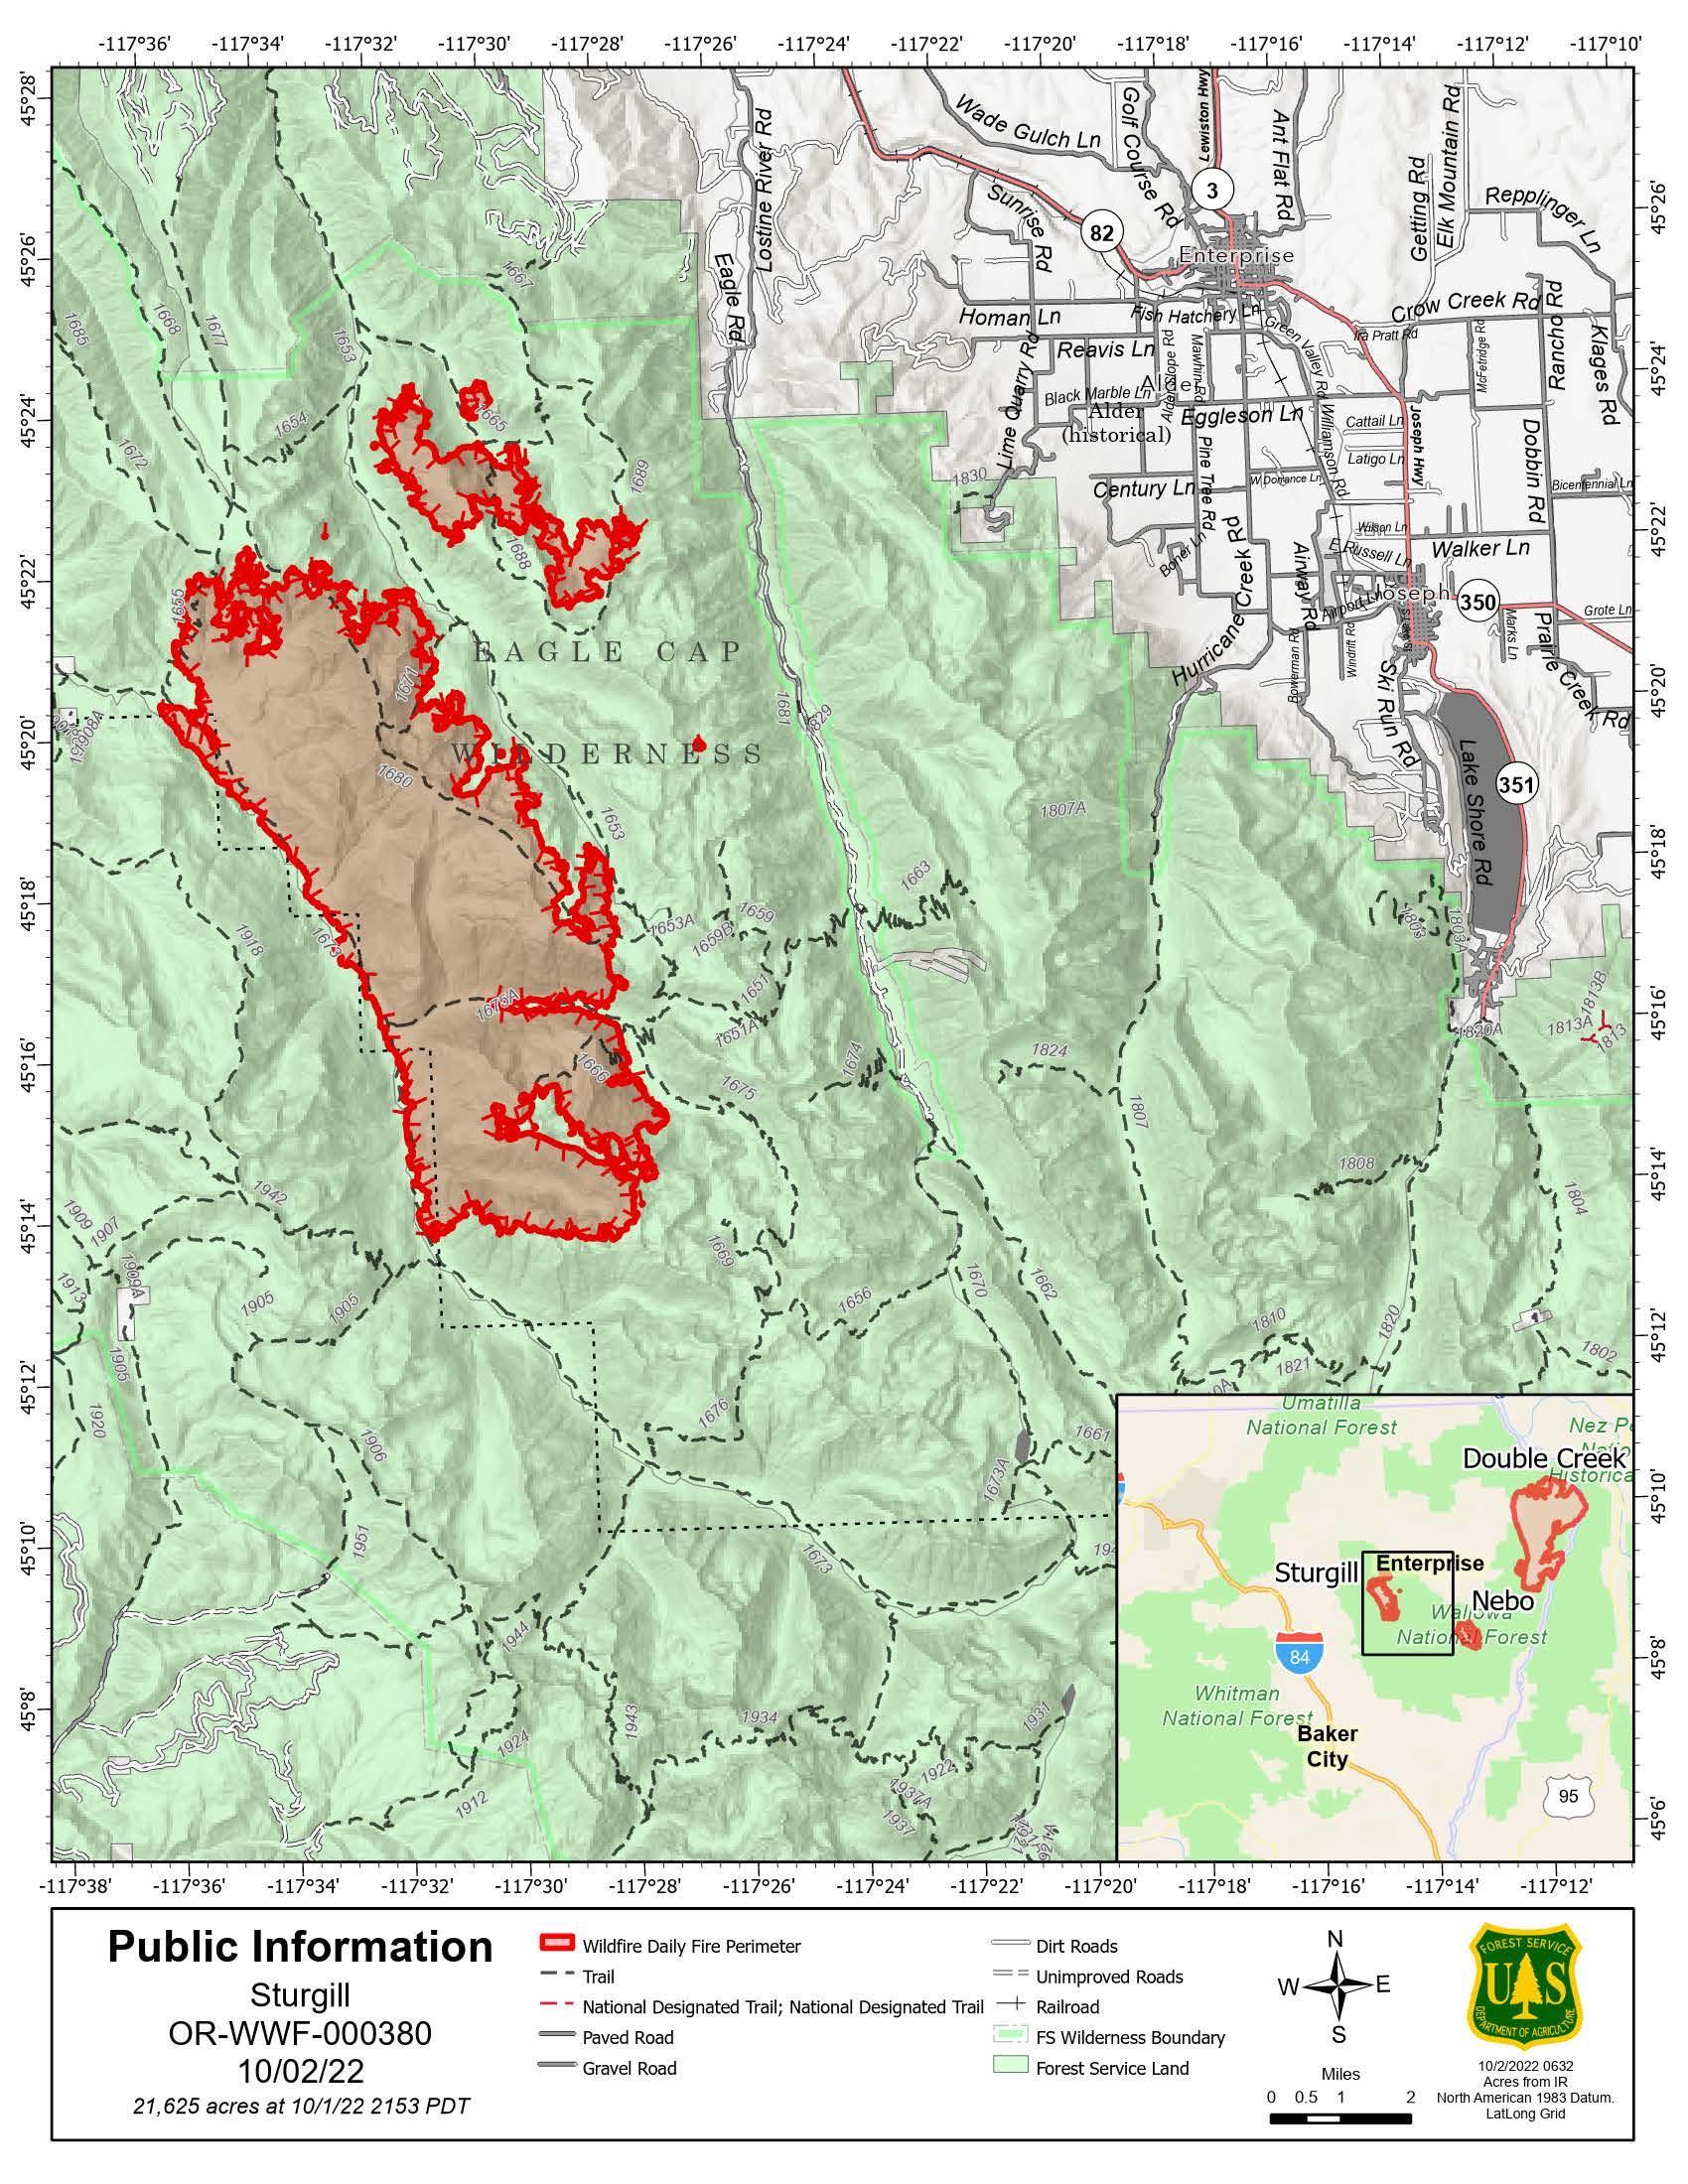 Goat Mountain 2 Fire Map - 20221002